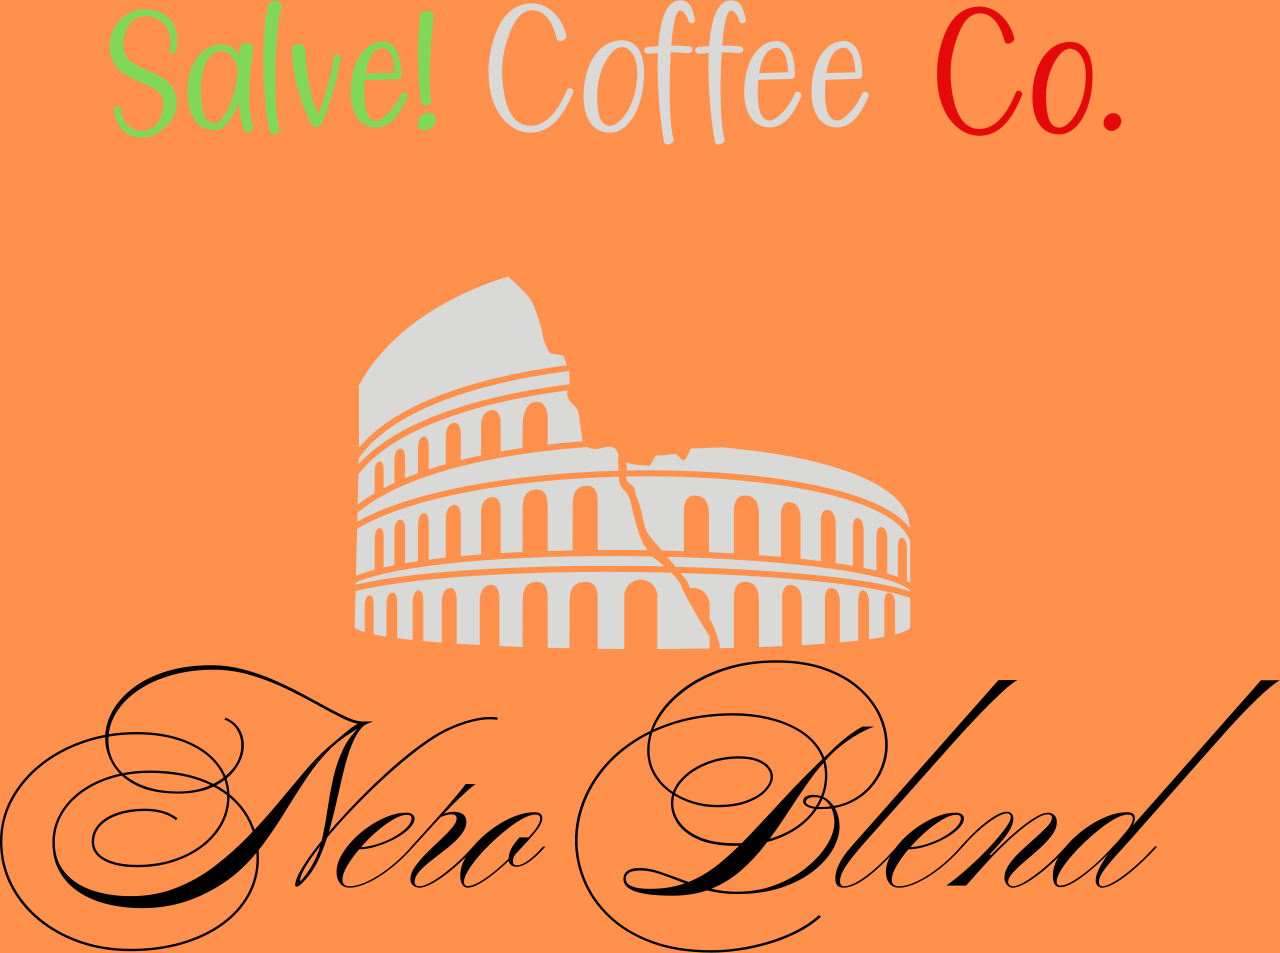 Salve! Coffee co's web page